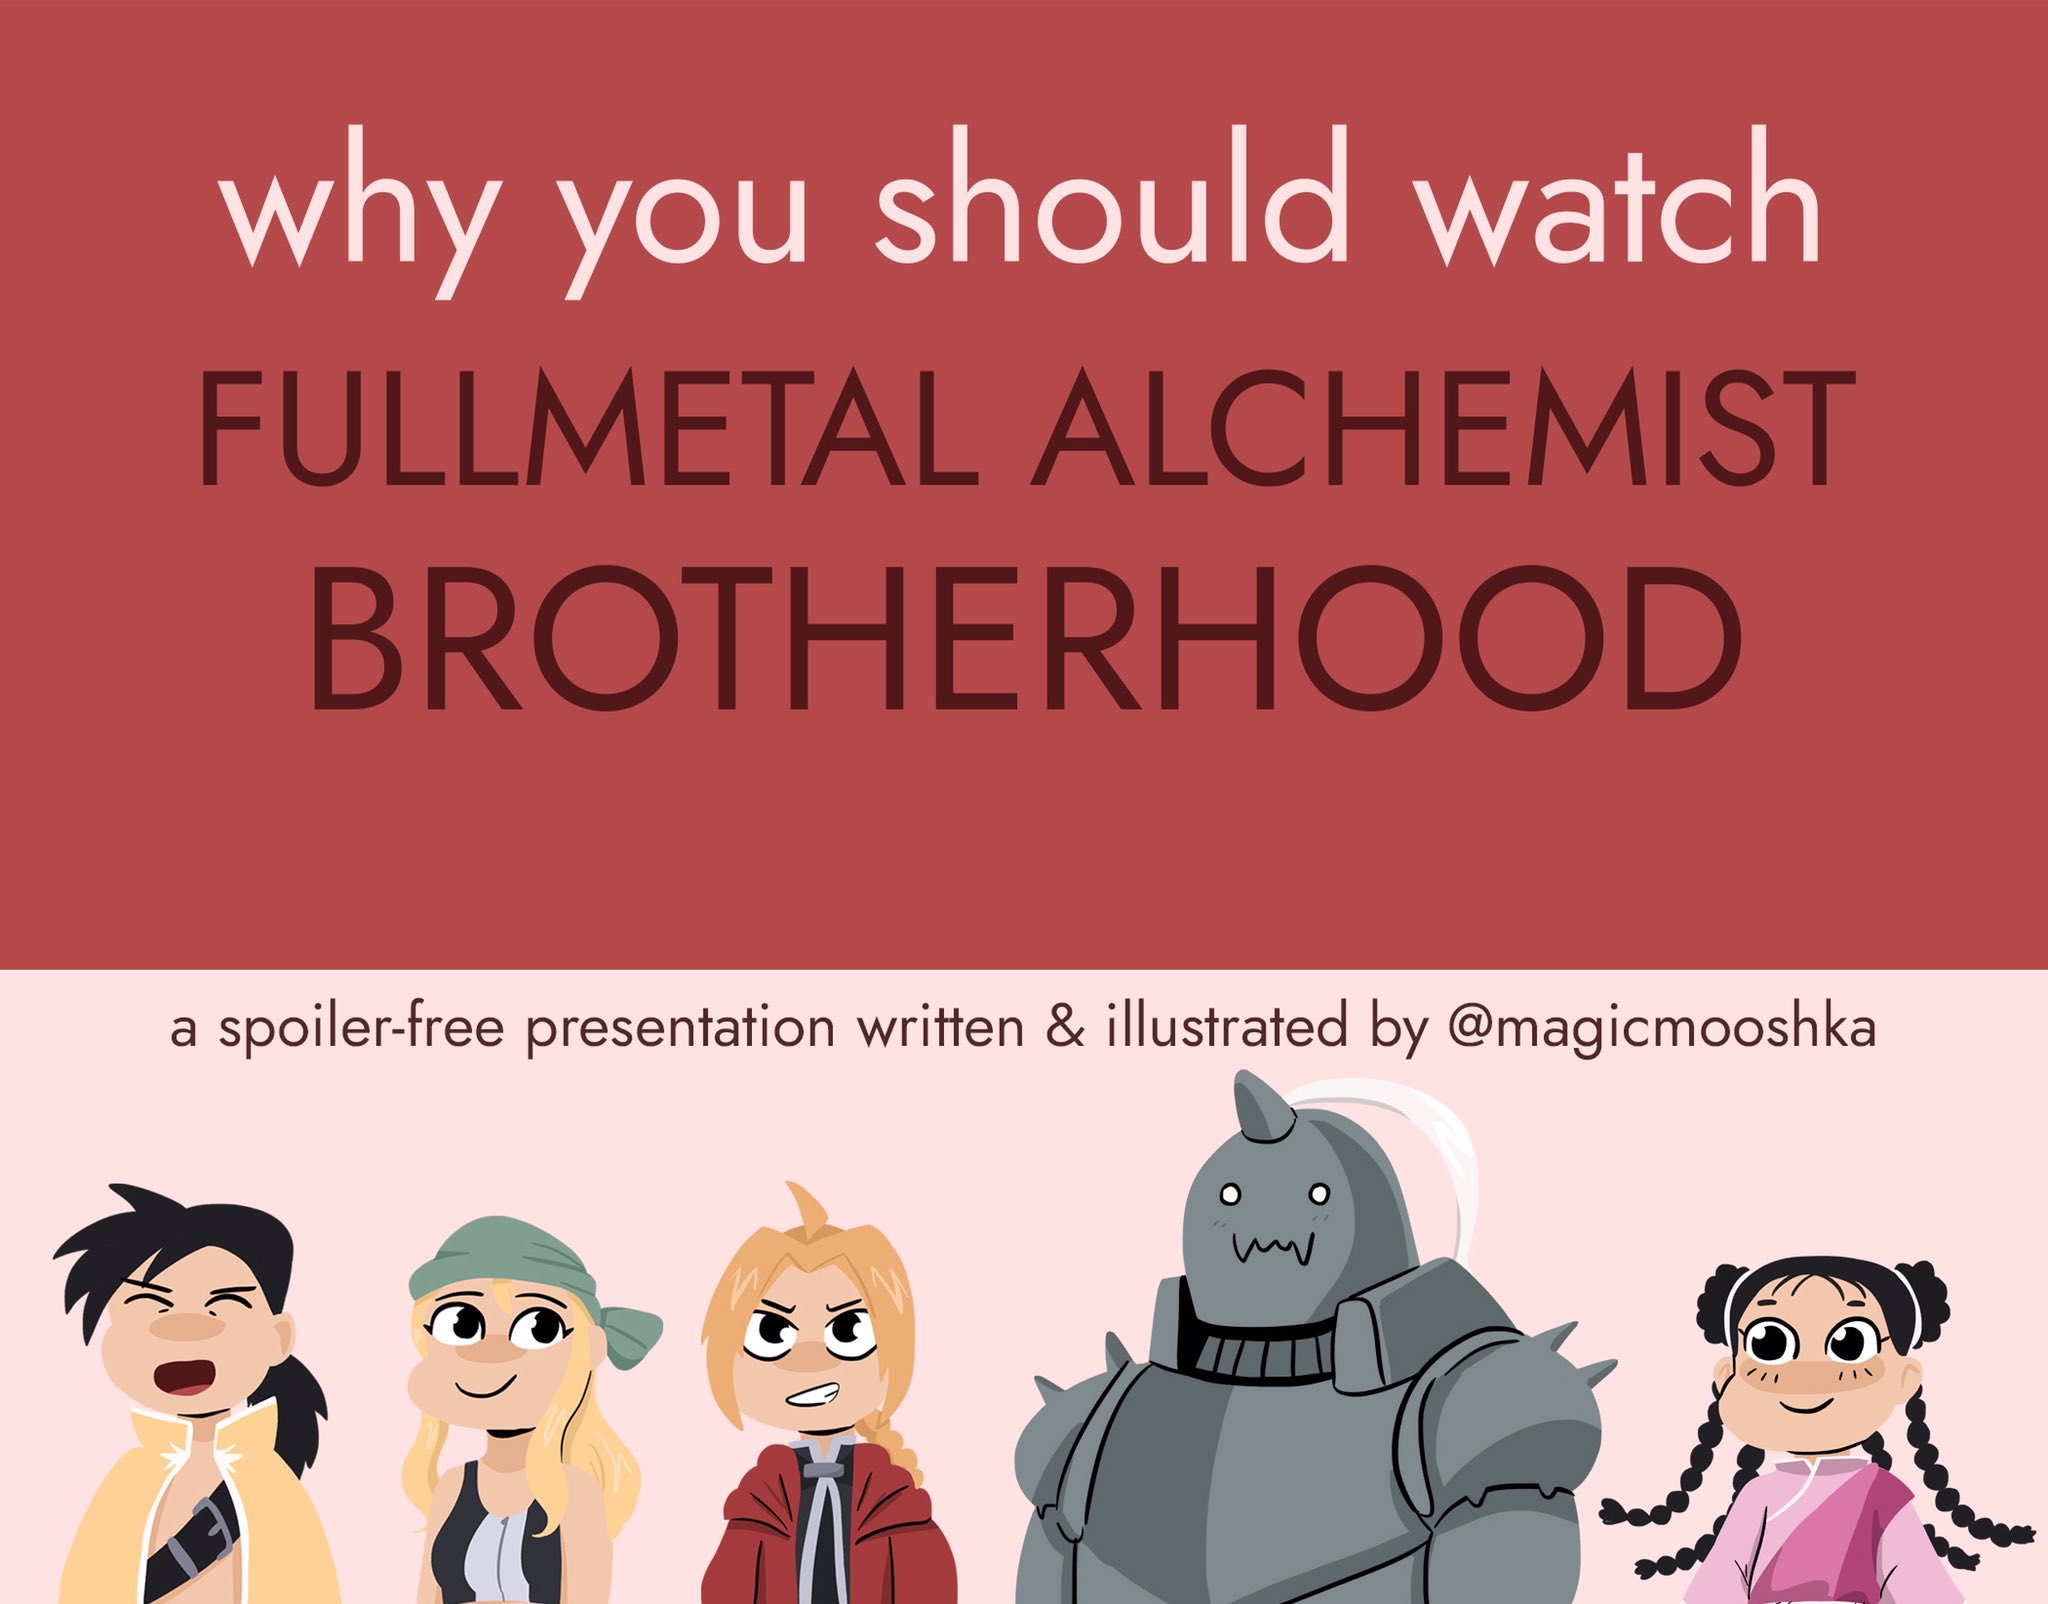 Fullmetal Alchemist' and 'Brotherhood': Do You Need to Watch 1